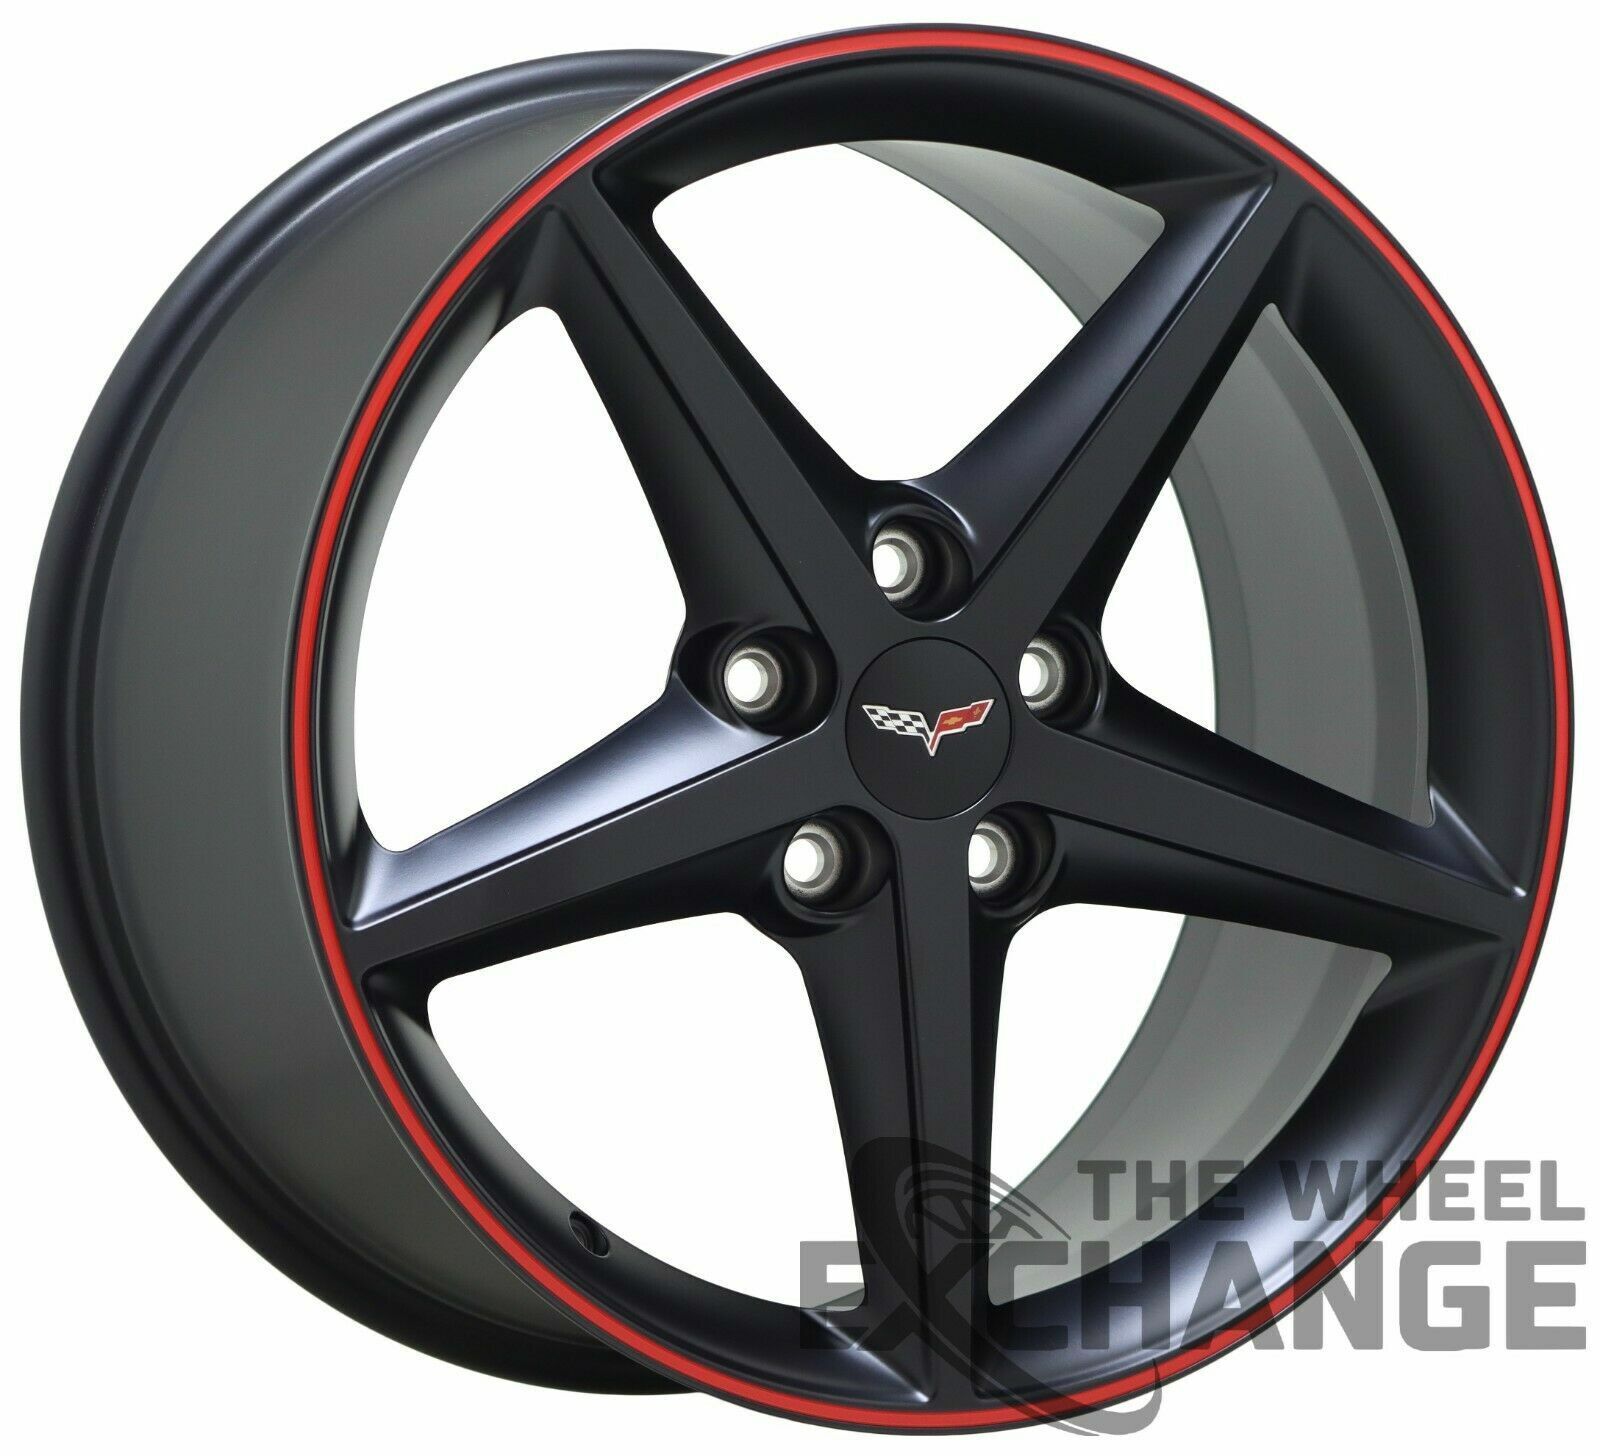 19x10 Corvette C6 Rear black red-line wheel rim Factory x1 OEM NEW 5489